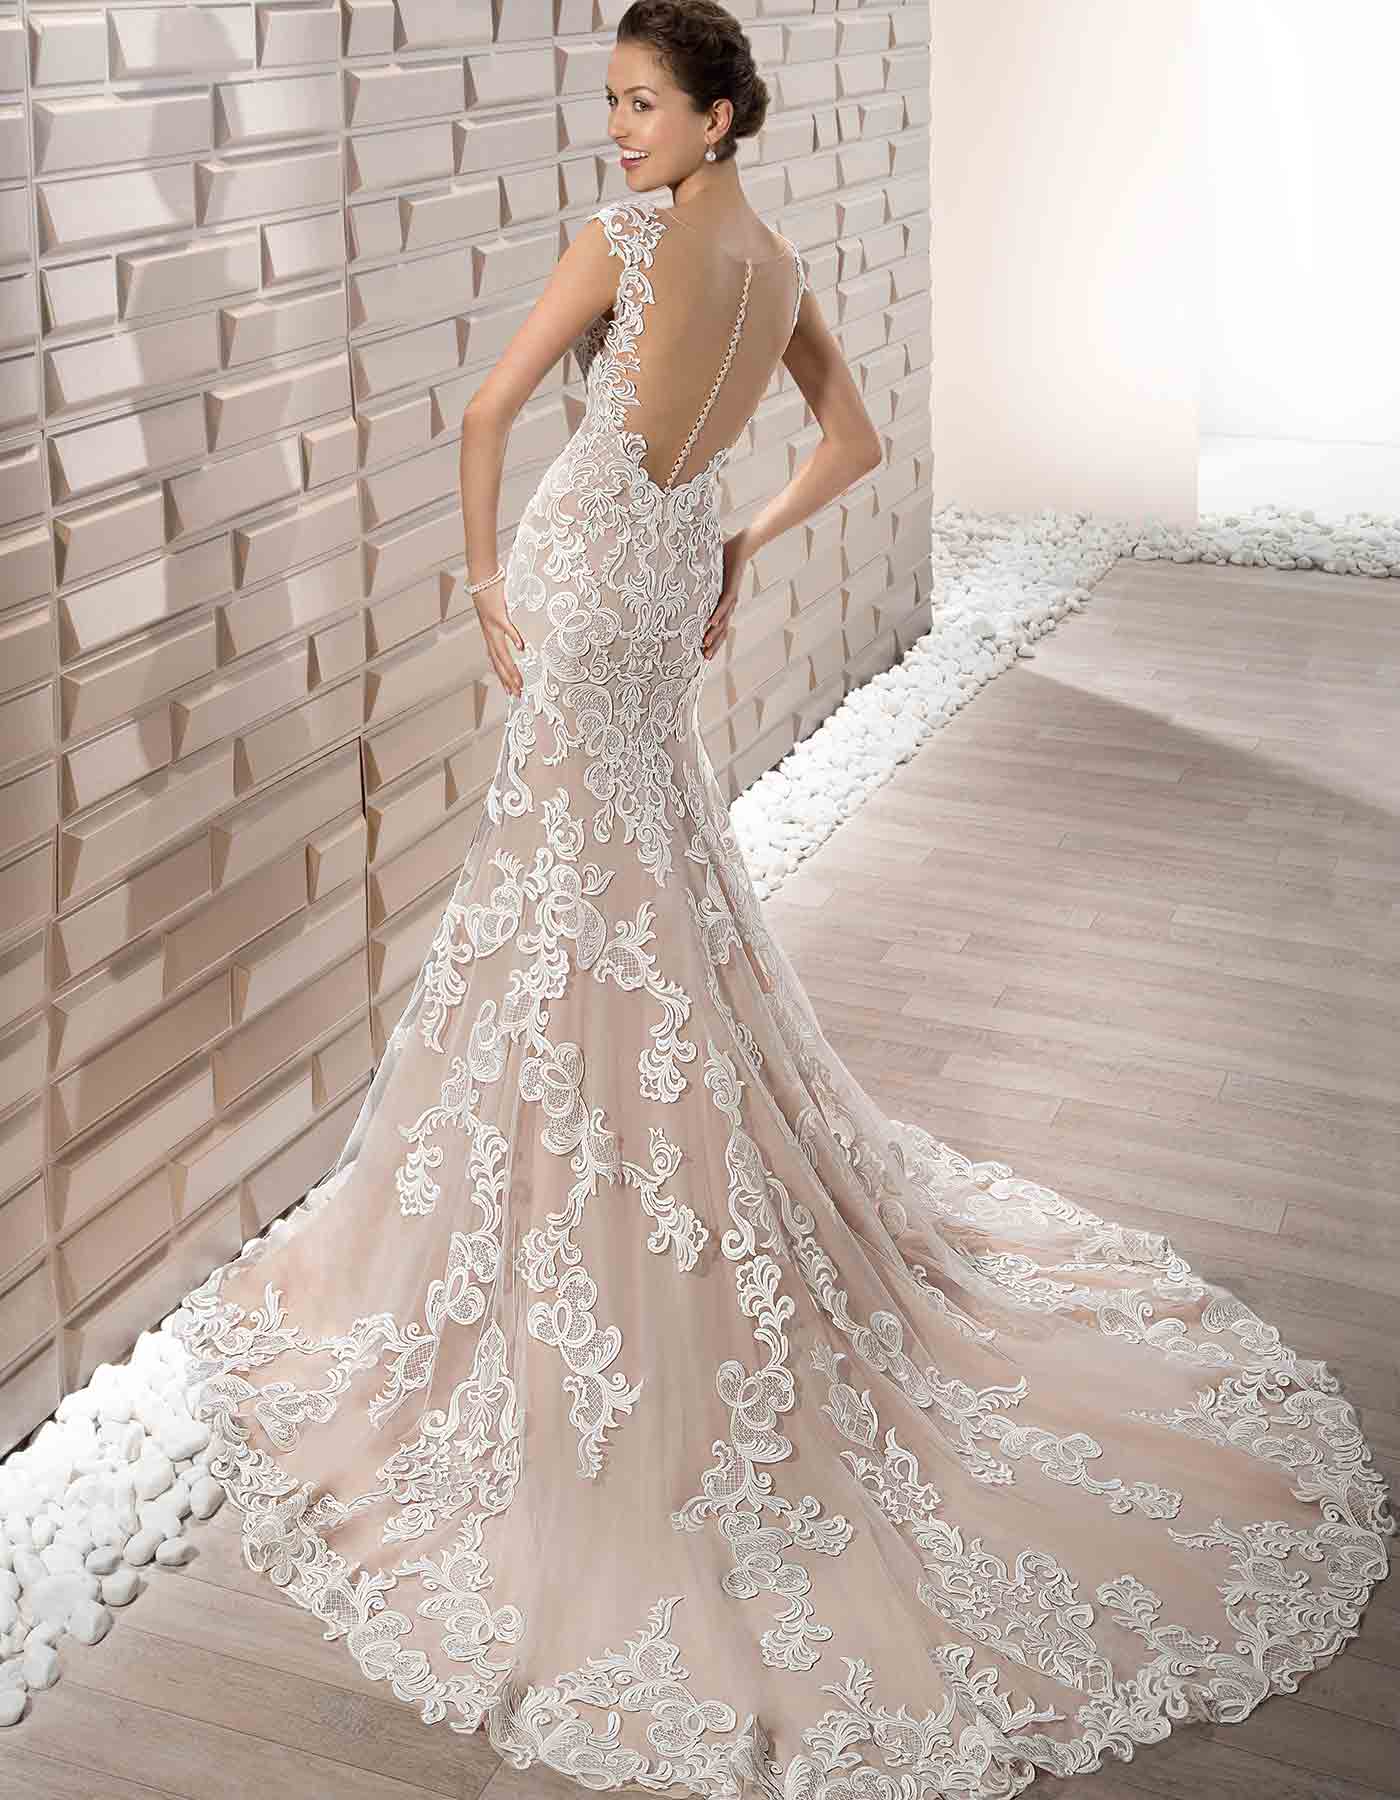 Lace wedding dress, 713 Demetrios, Melbourne